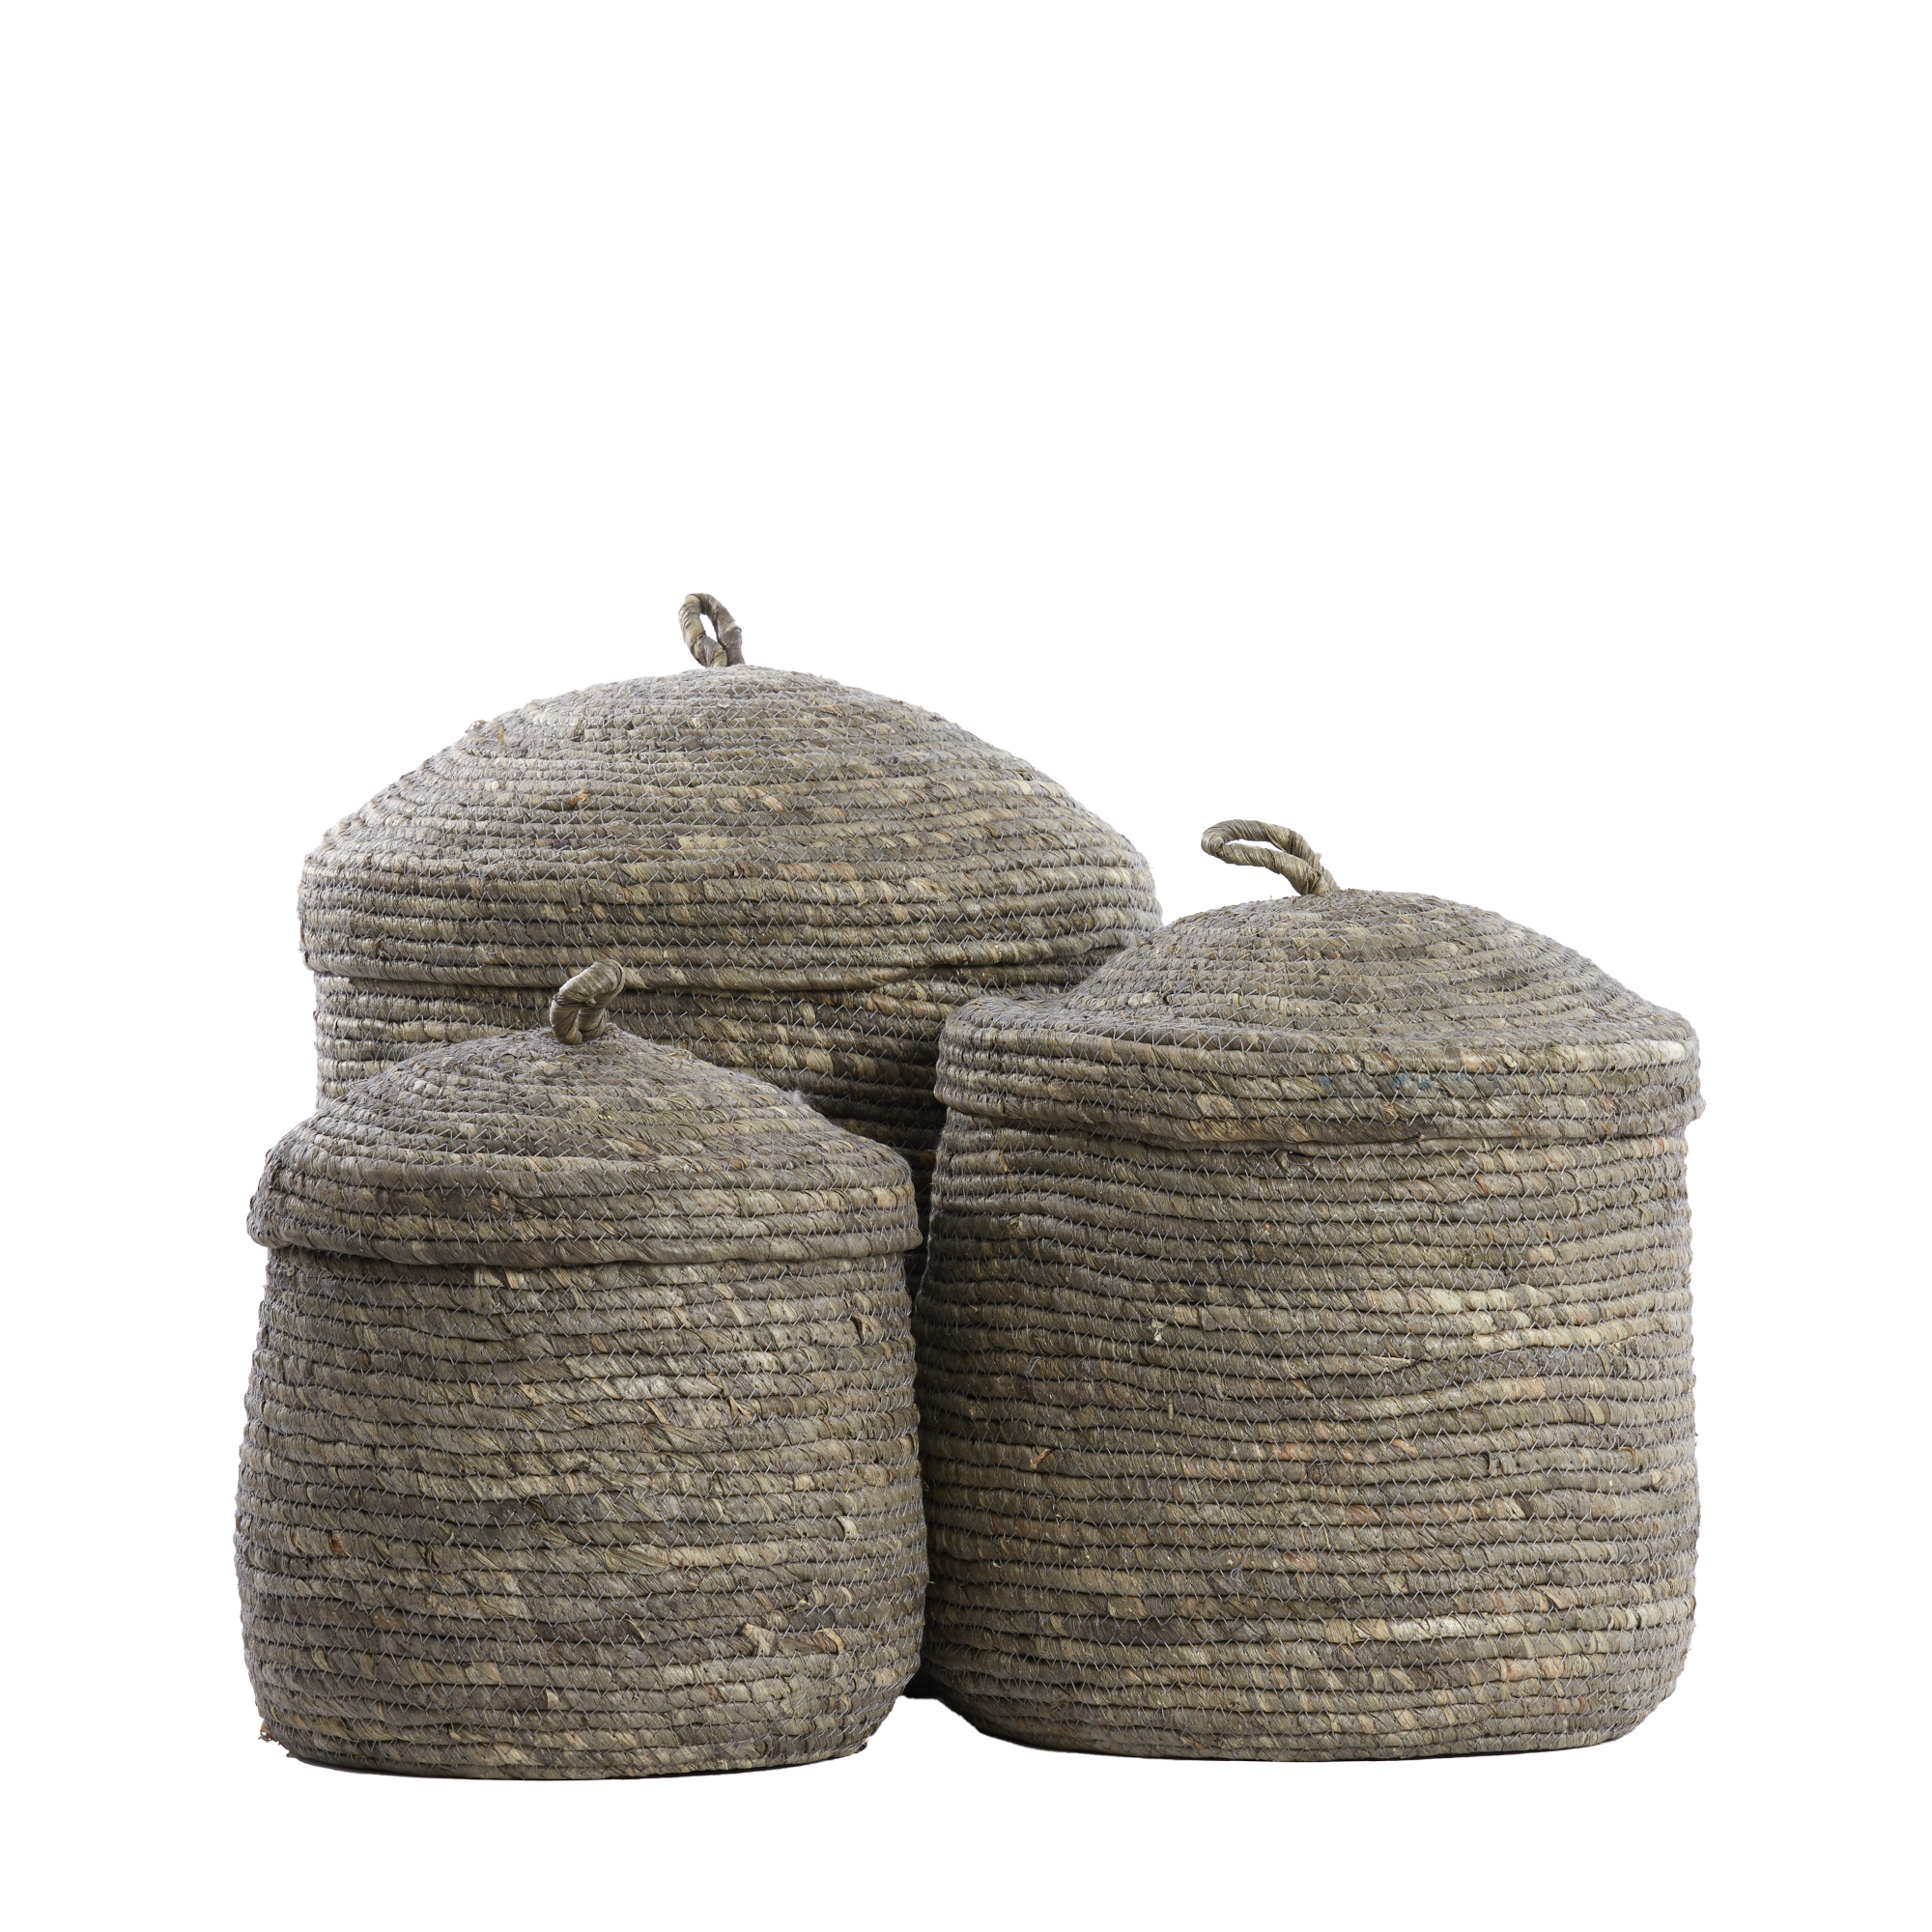 Baskets with lid set of 3 MANGALA grey